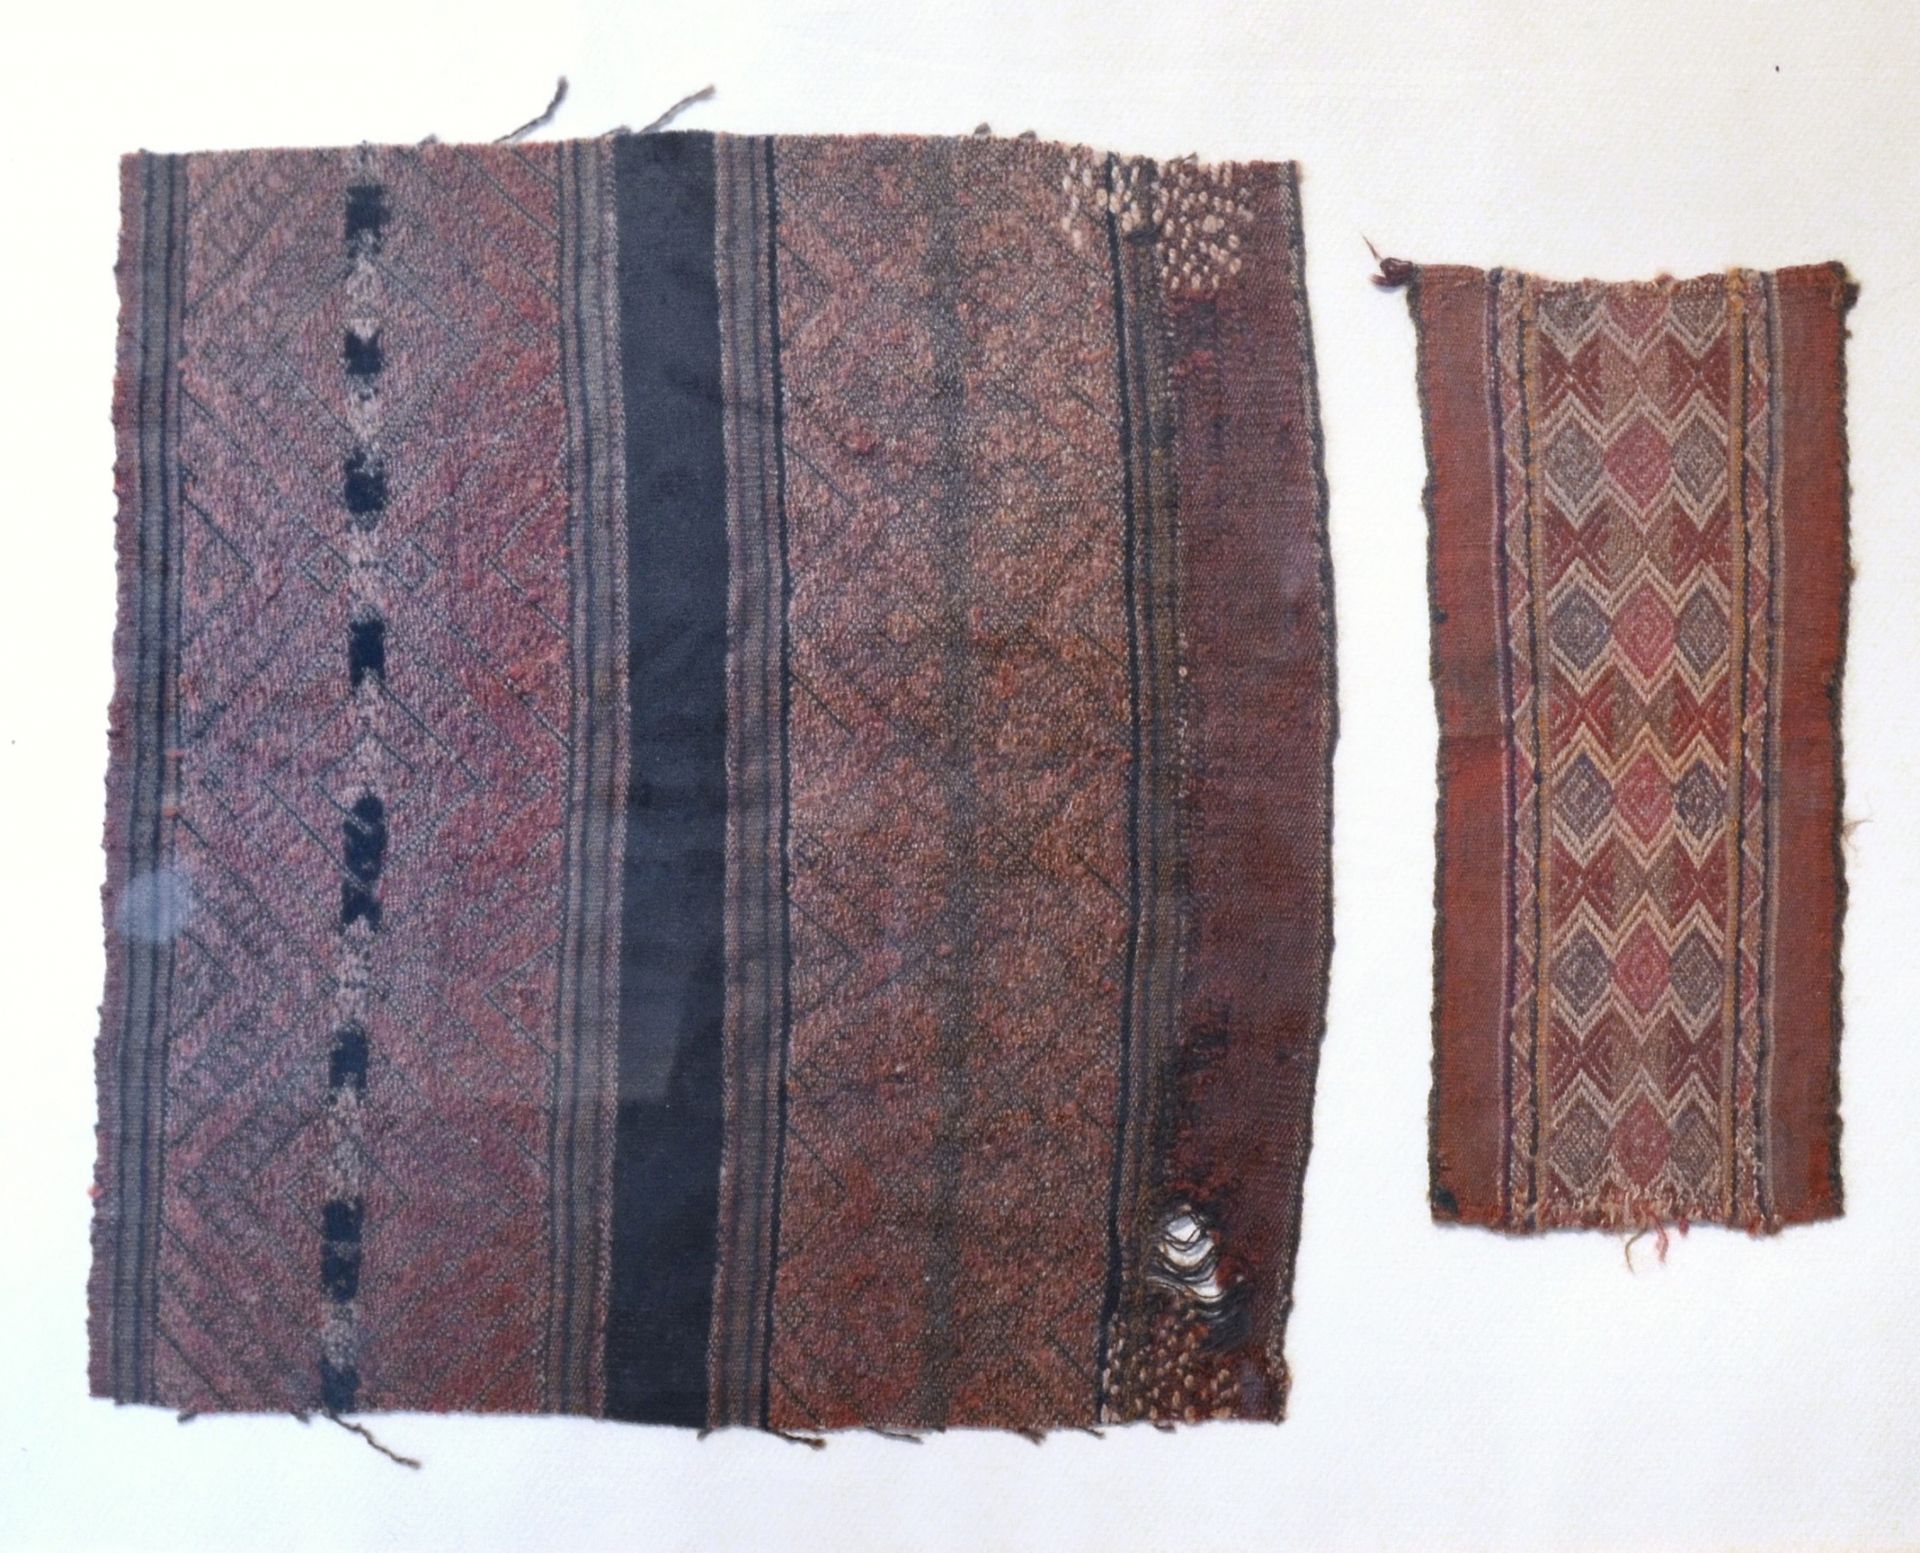 Deux fragments de tissu 秘鲁伊卡，公元1450-1532年

30.5 x 29 cm

22.5 x 10 cm